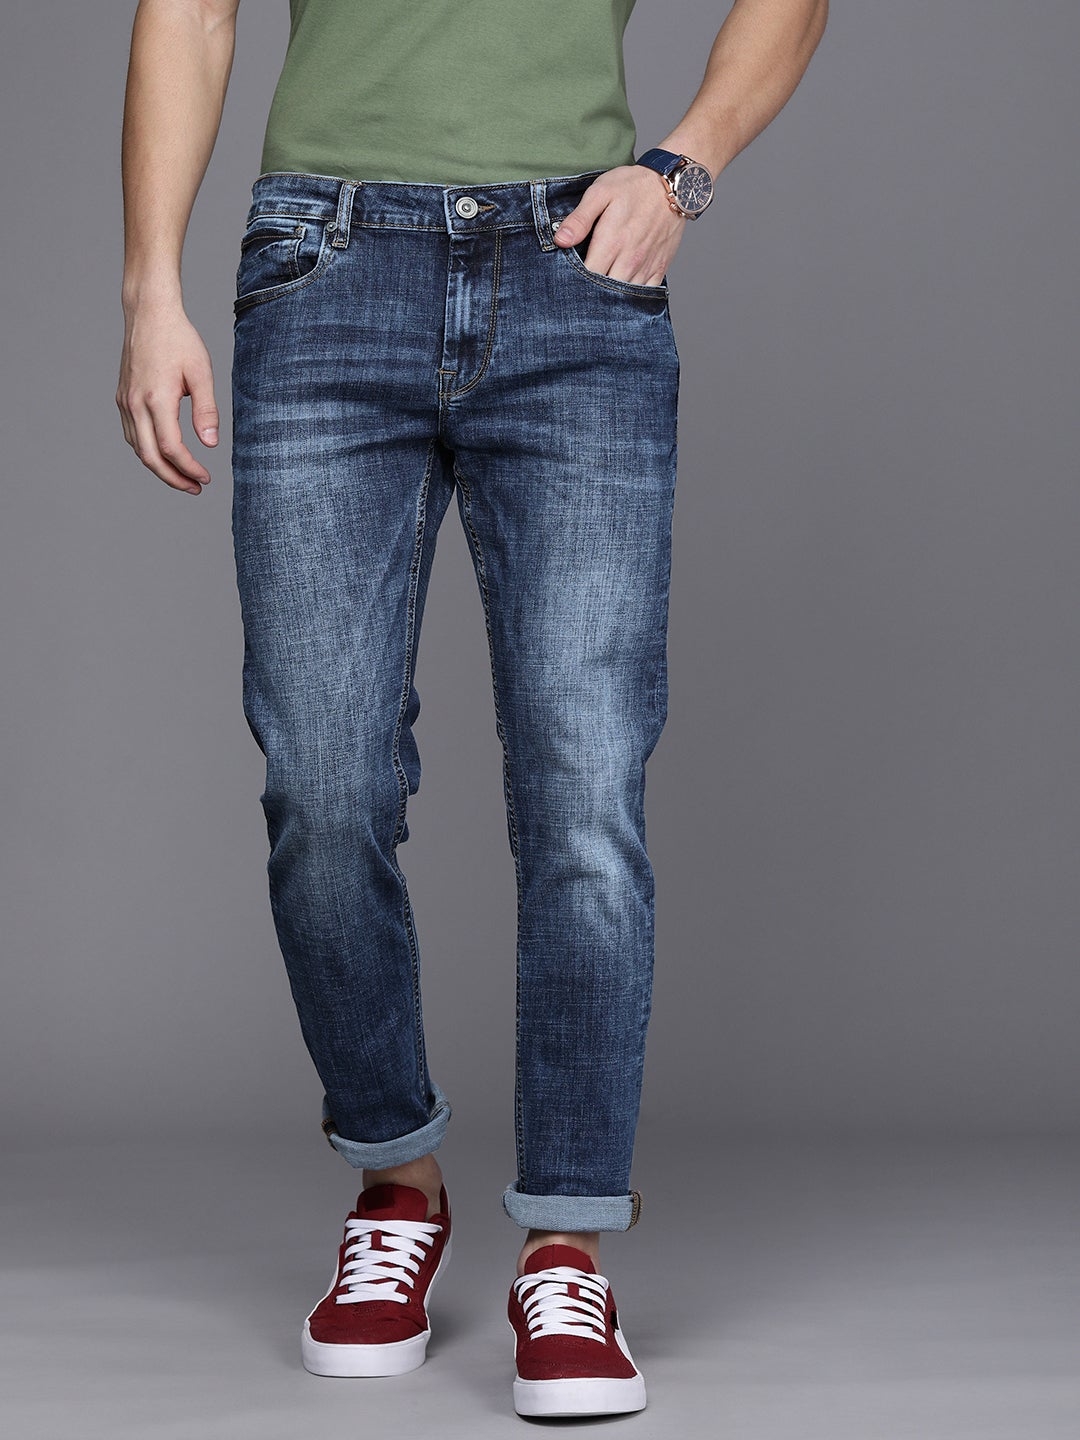 Voi Jeans | Men's Blue track Skinny Stretchable Jeans (VOJN1625)